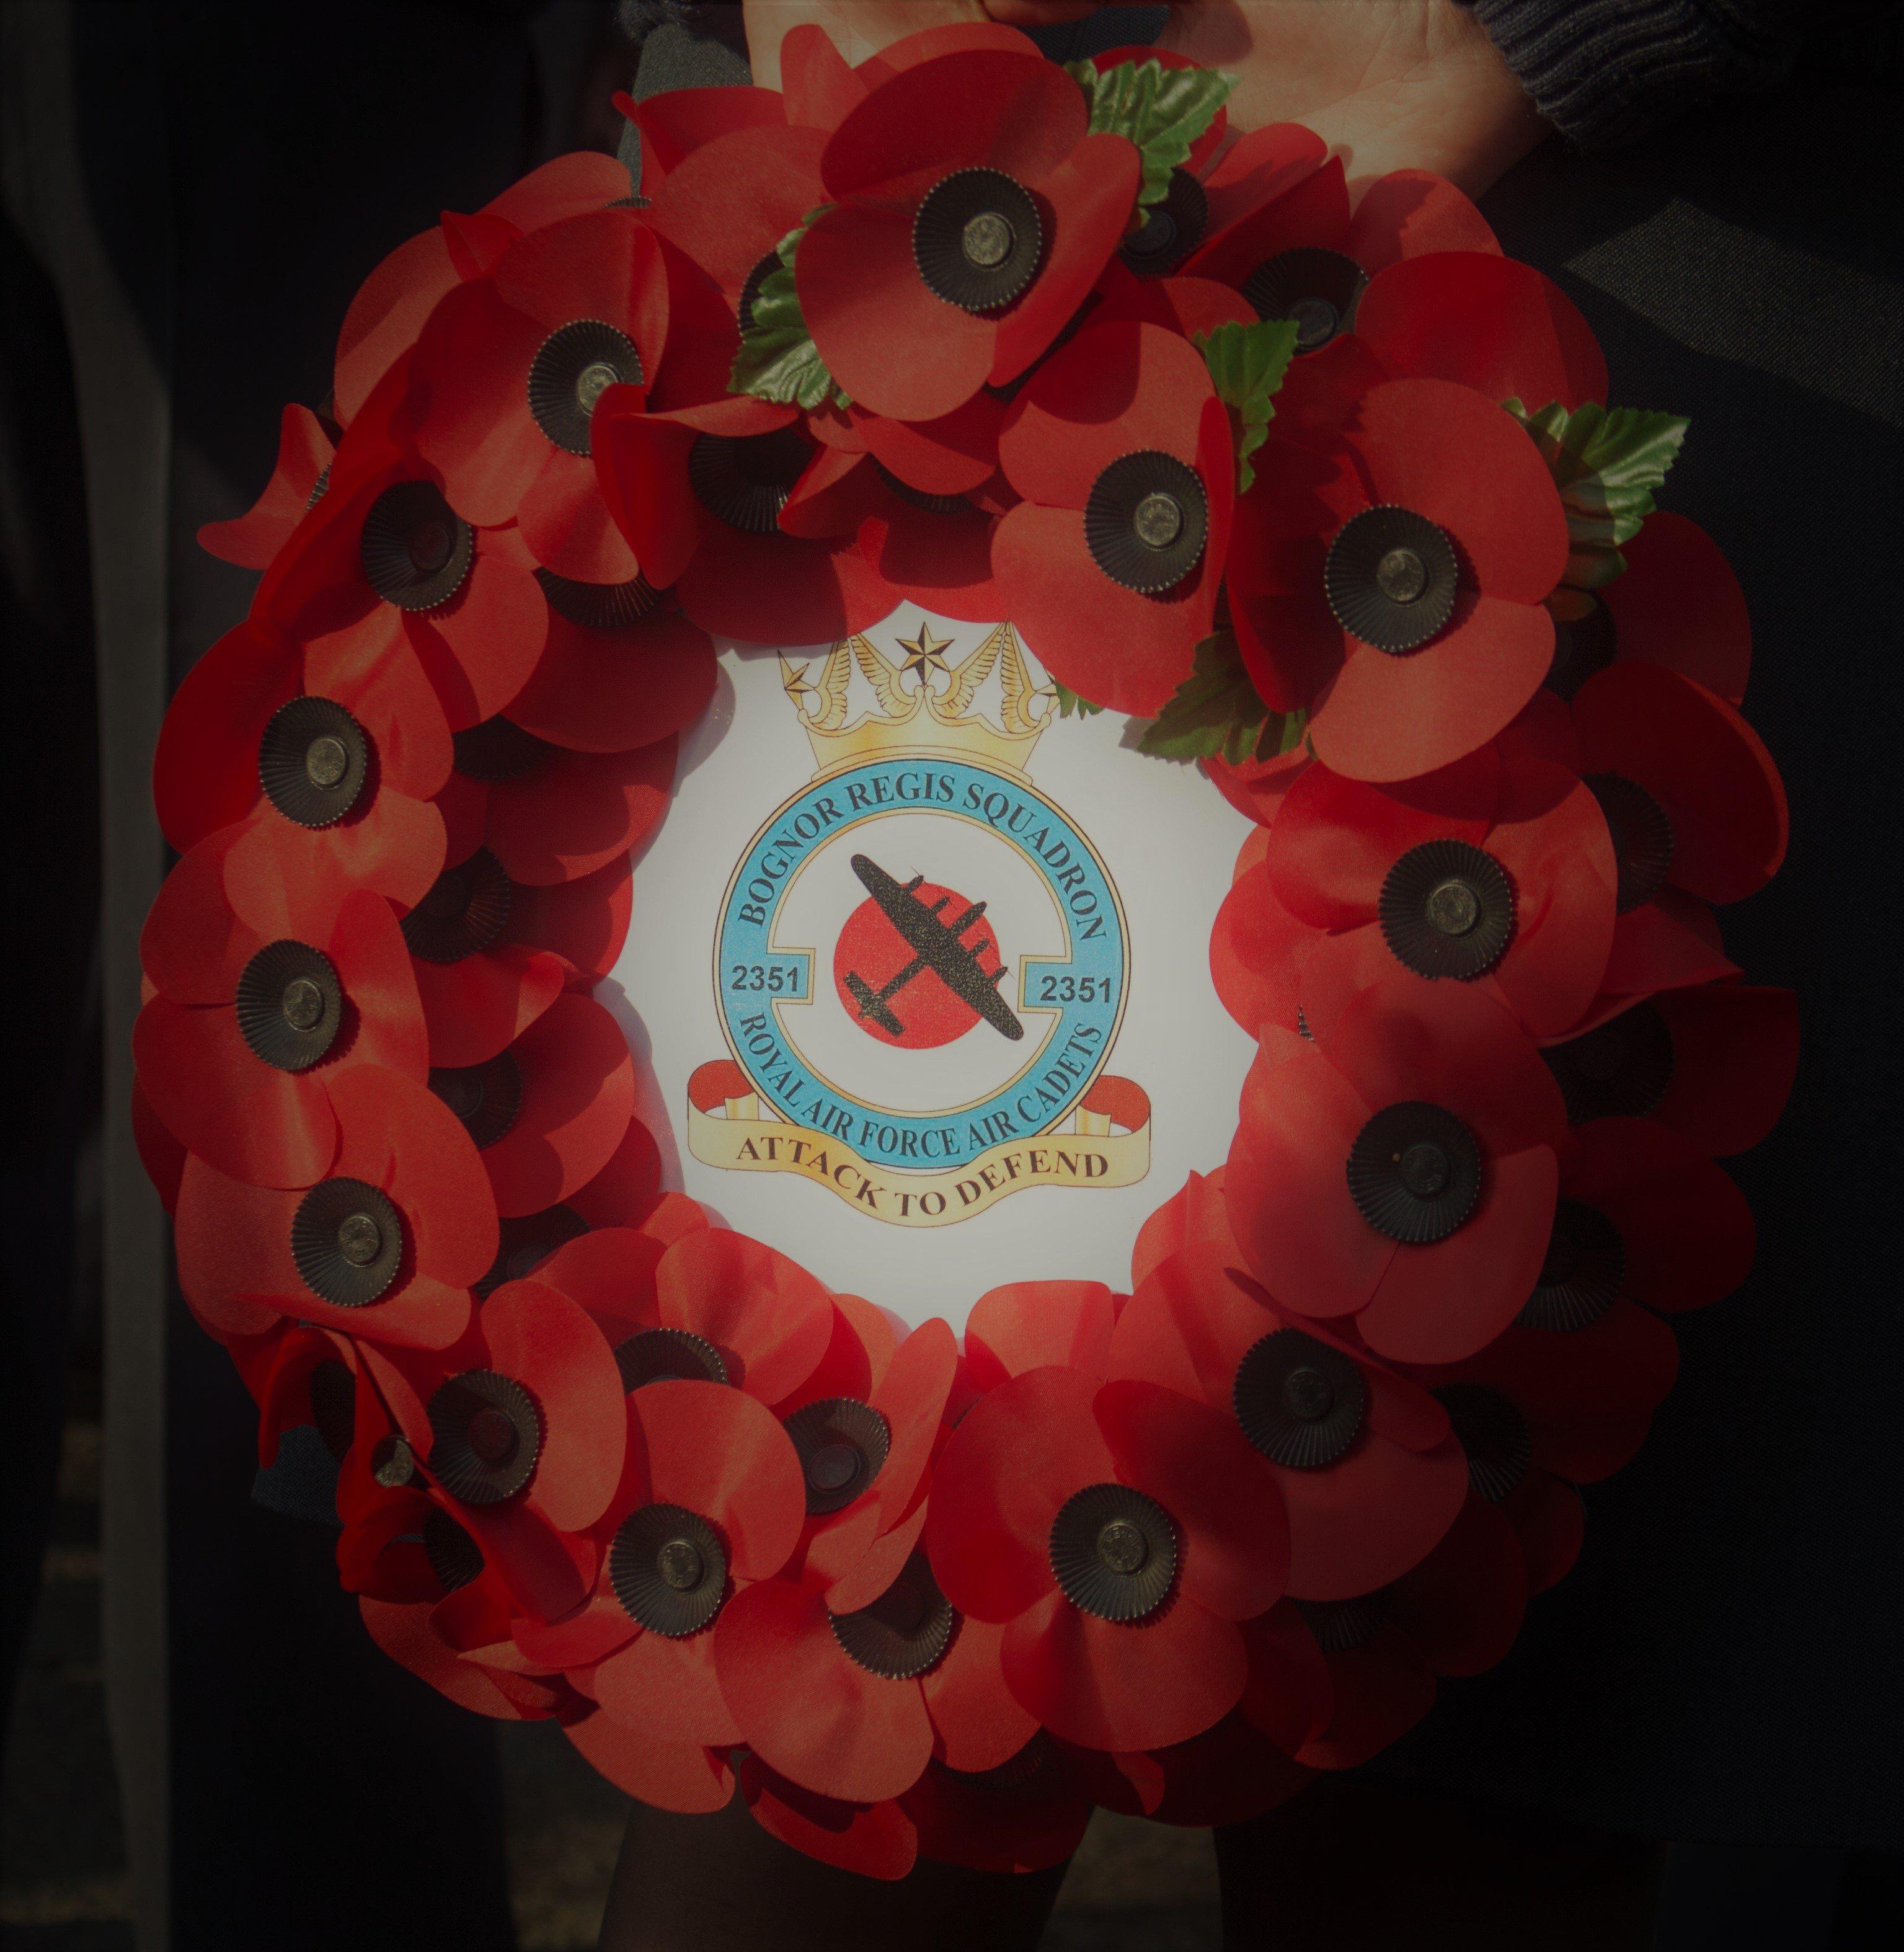 2351 Bognor Regis Air Cadets Remembrance wreath
photo courtesy of Chris Moran and 2351 Bognor Regis Air Cadets